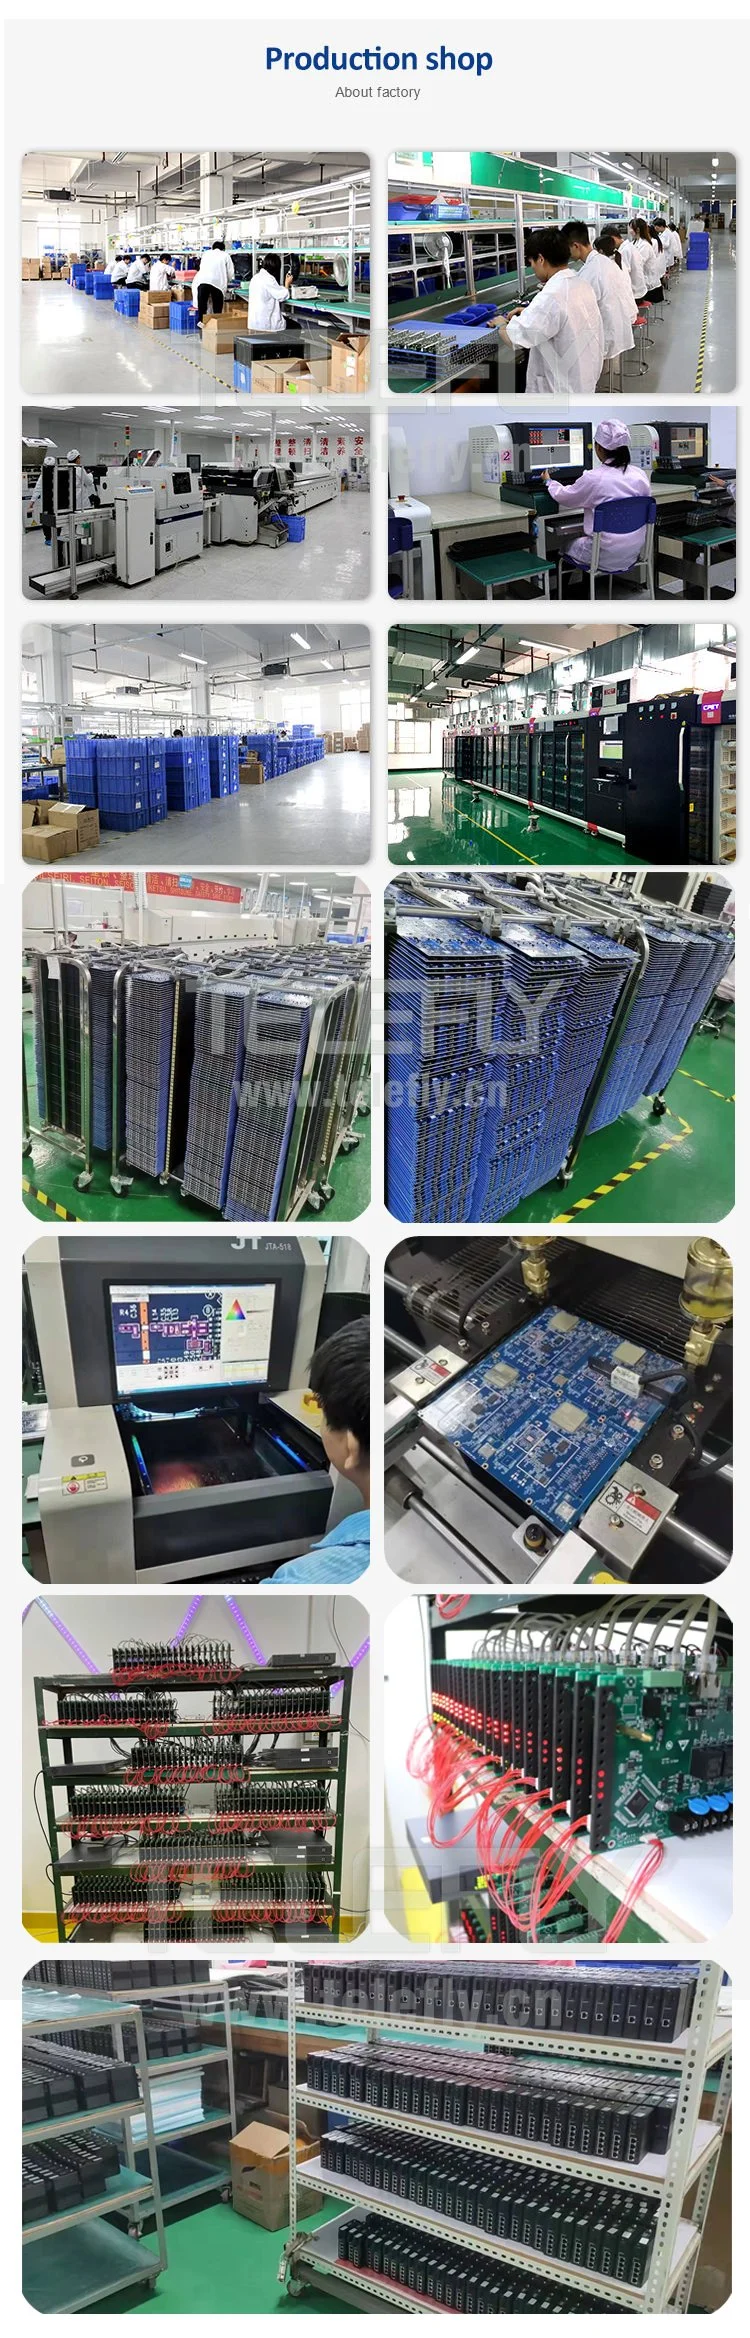 New Original Electronic Components IC Chips Xilinx Xc7z020-1clg400c Mpu Soc Cortex-A9 Artix-7 Zynq-7000 32bit 667MHz 1.2V/3.3V 400BGA in Stock